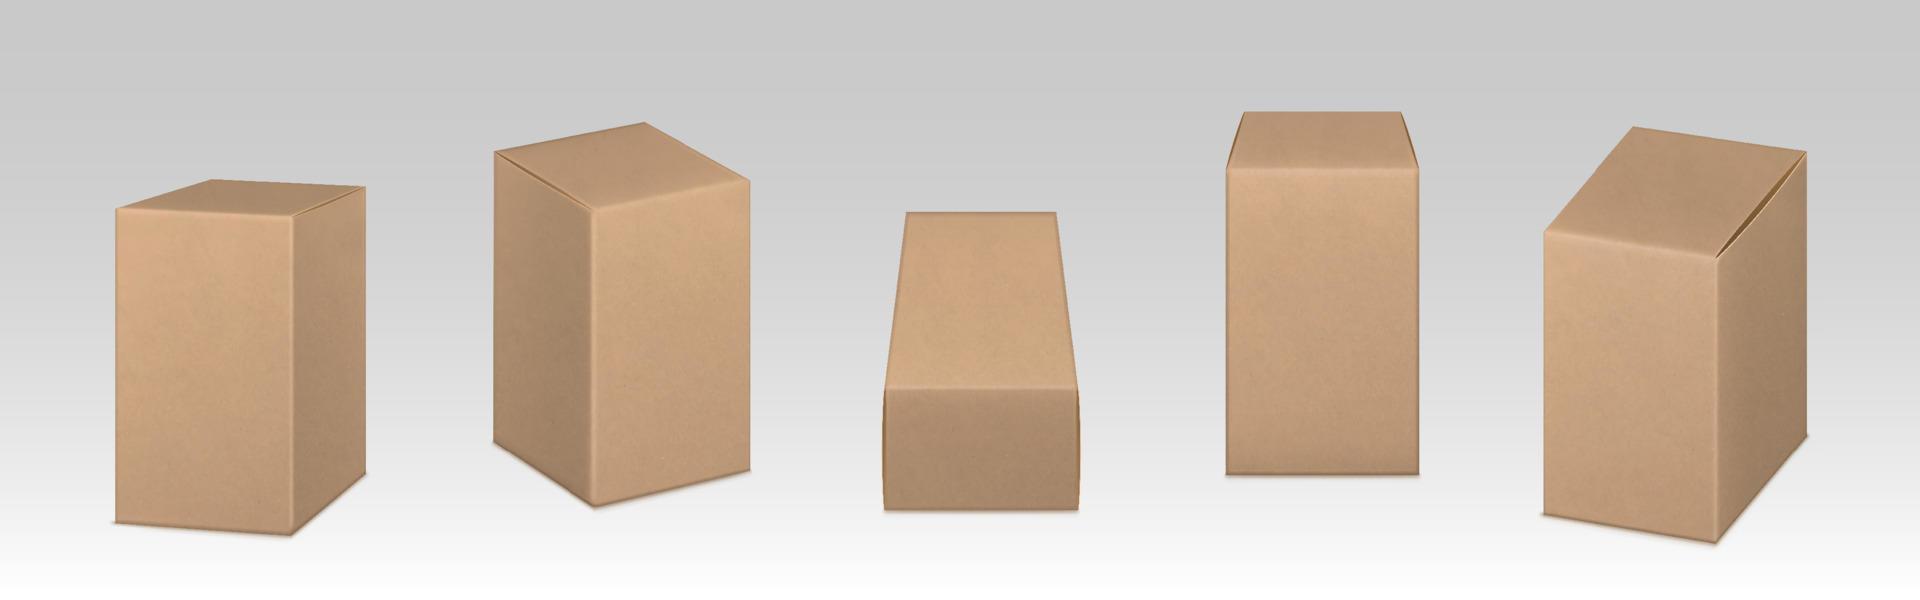 box-modell, handwerks-öko-paket, braune behälter vektor